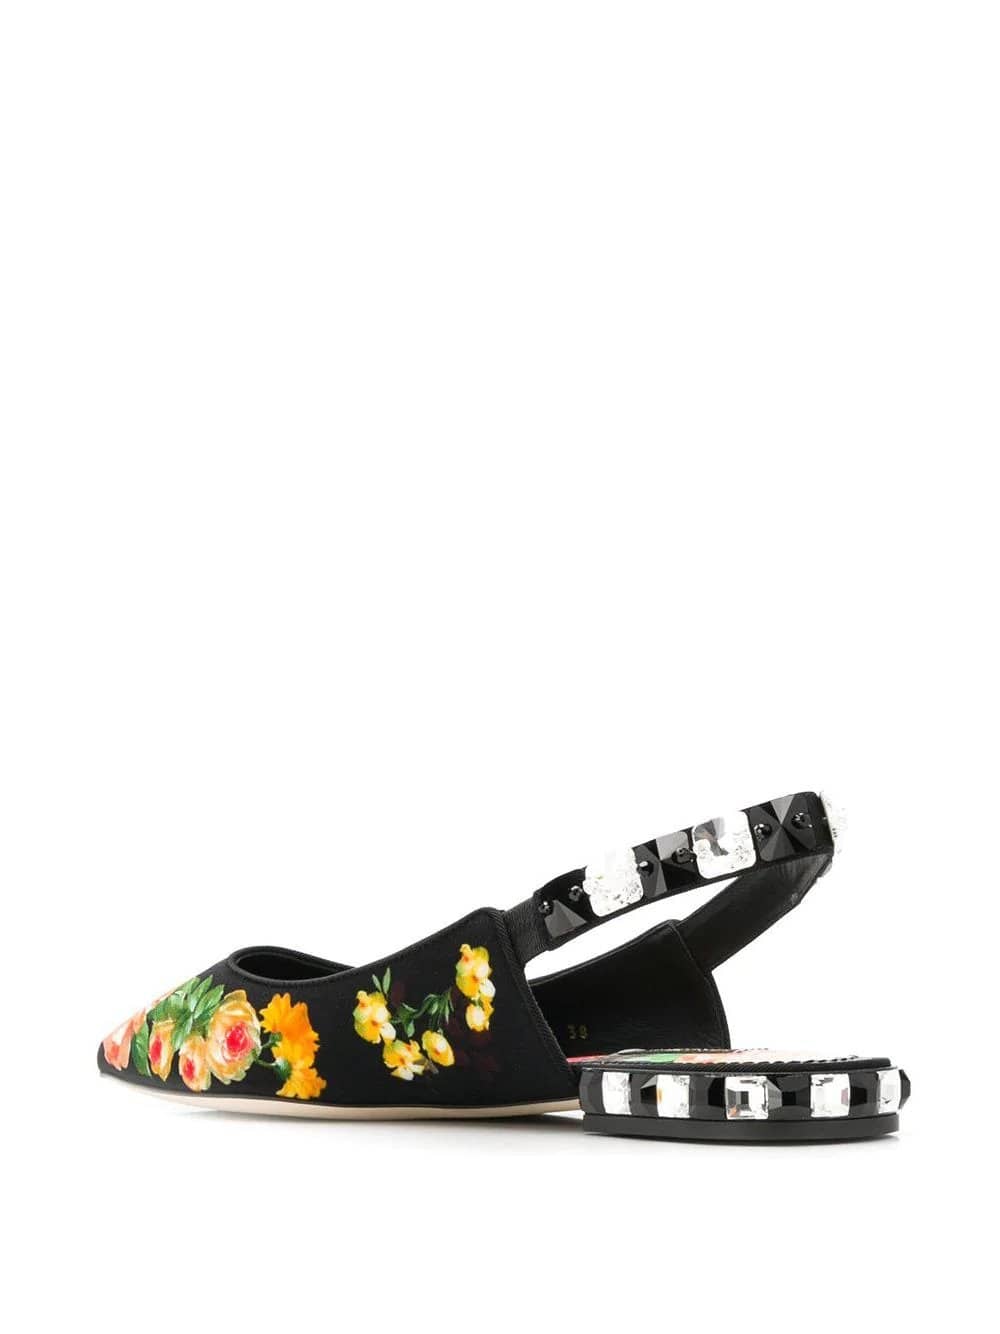 Dolce & Gabbana Floral-Print Flat Sandals